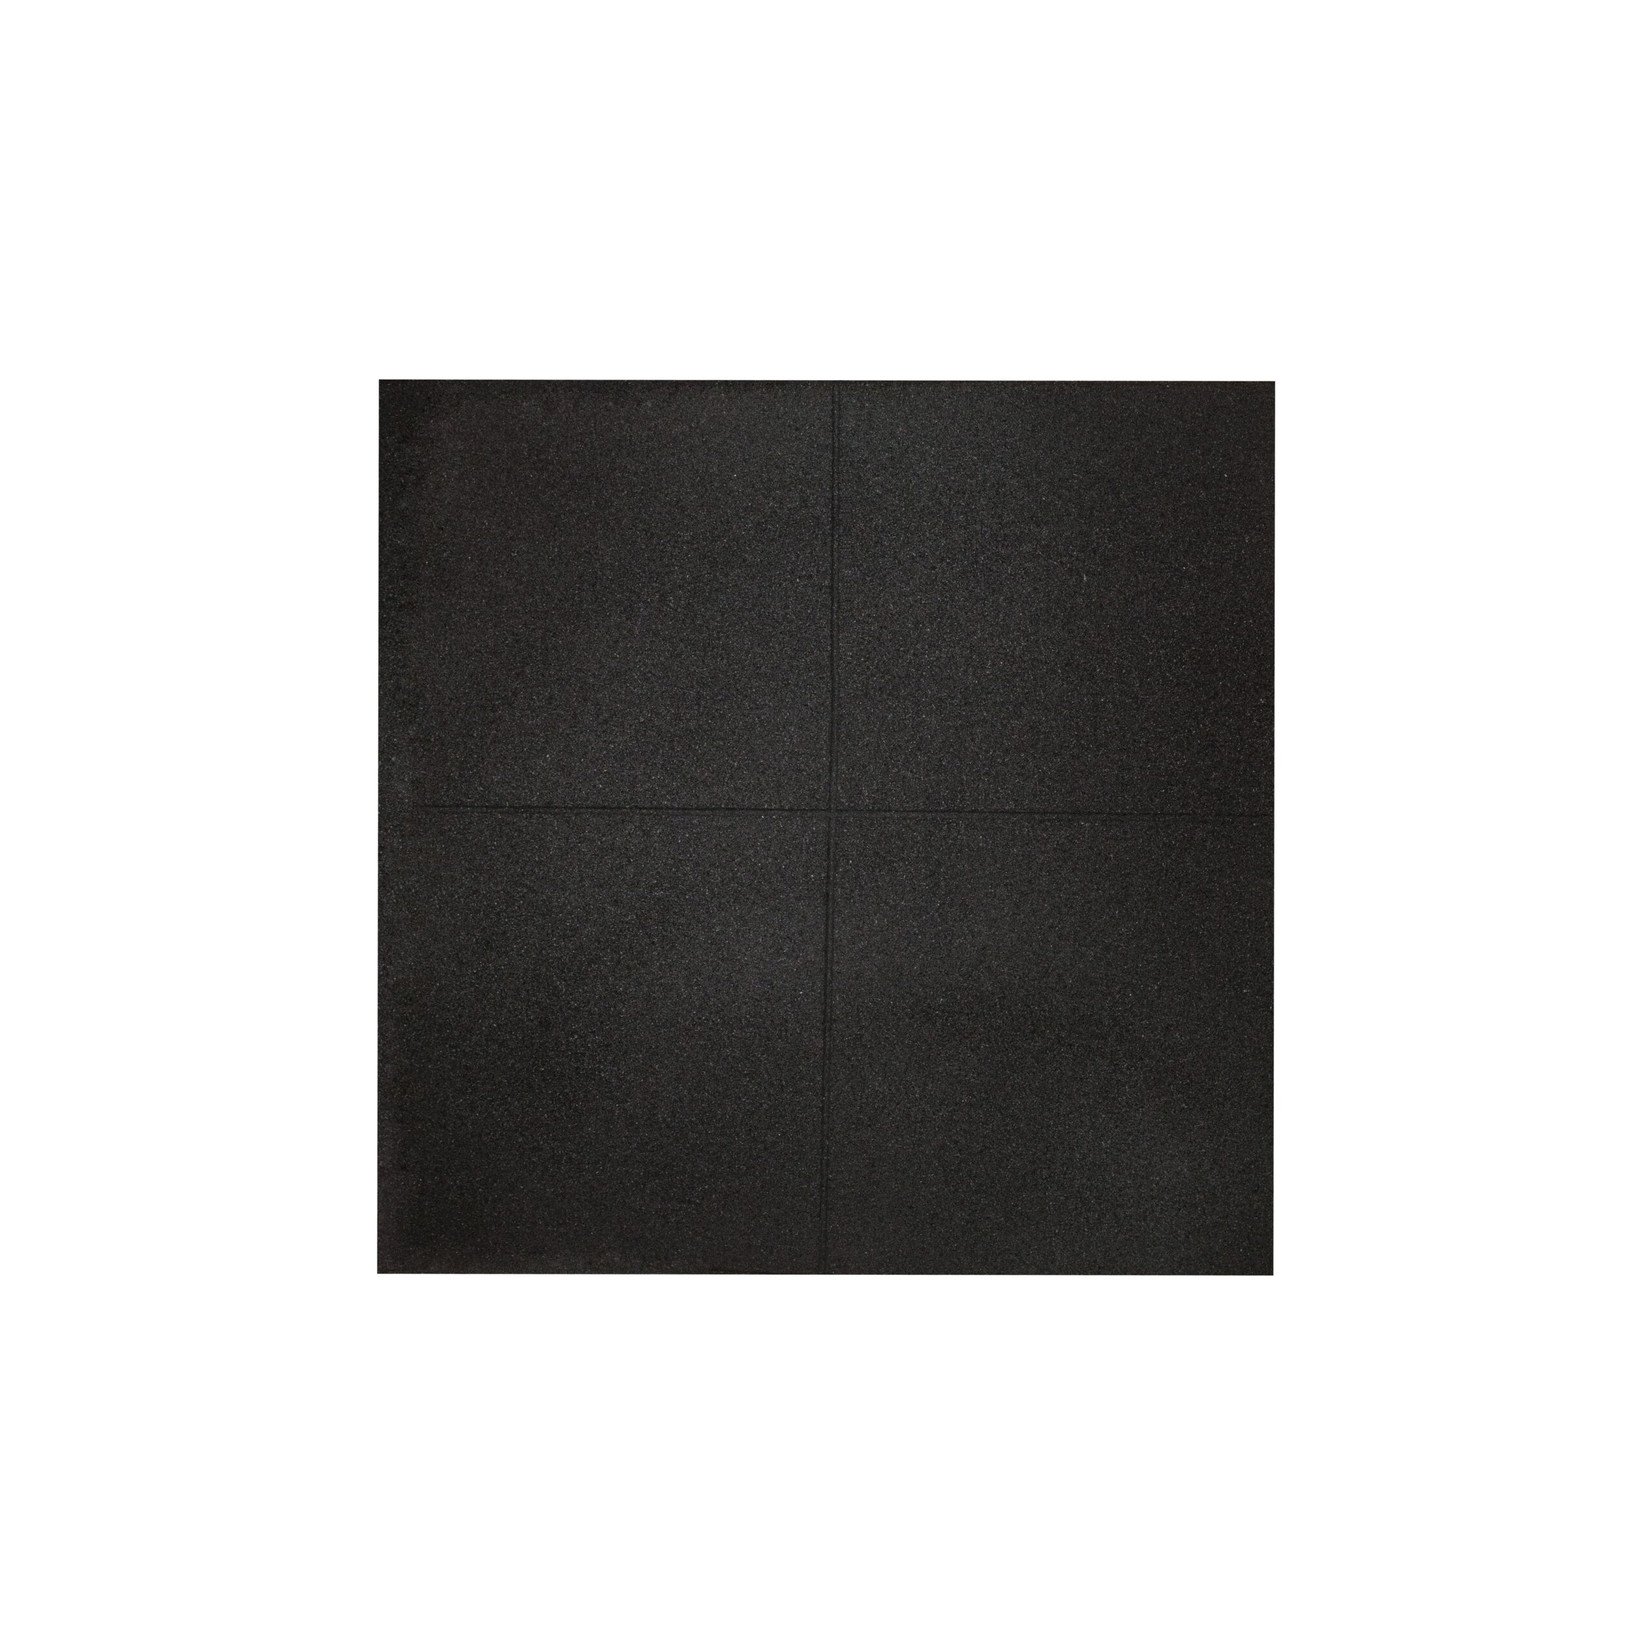 Rubber Gym Flooring | Black (1 m²)